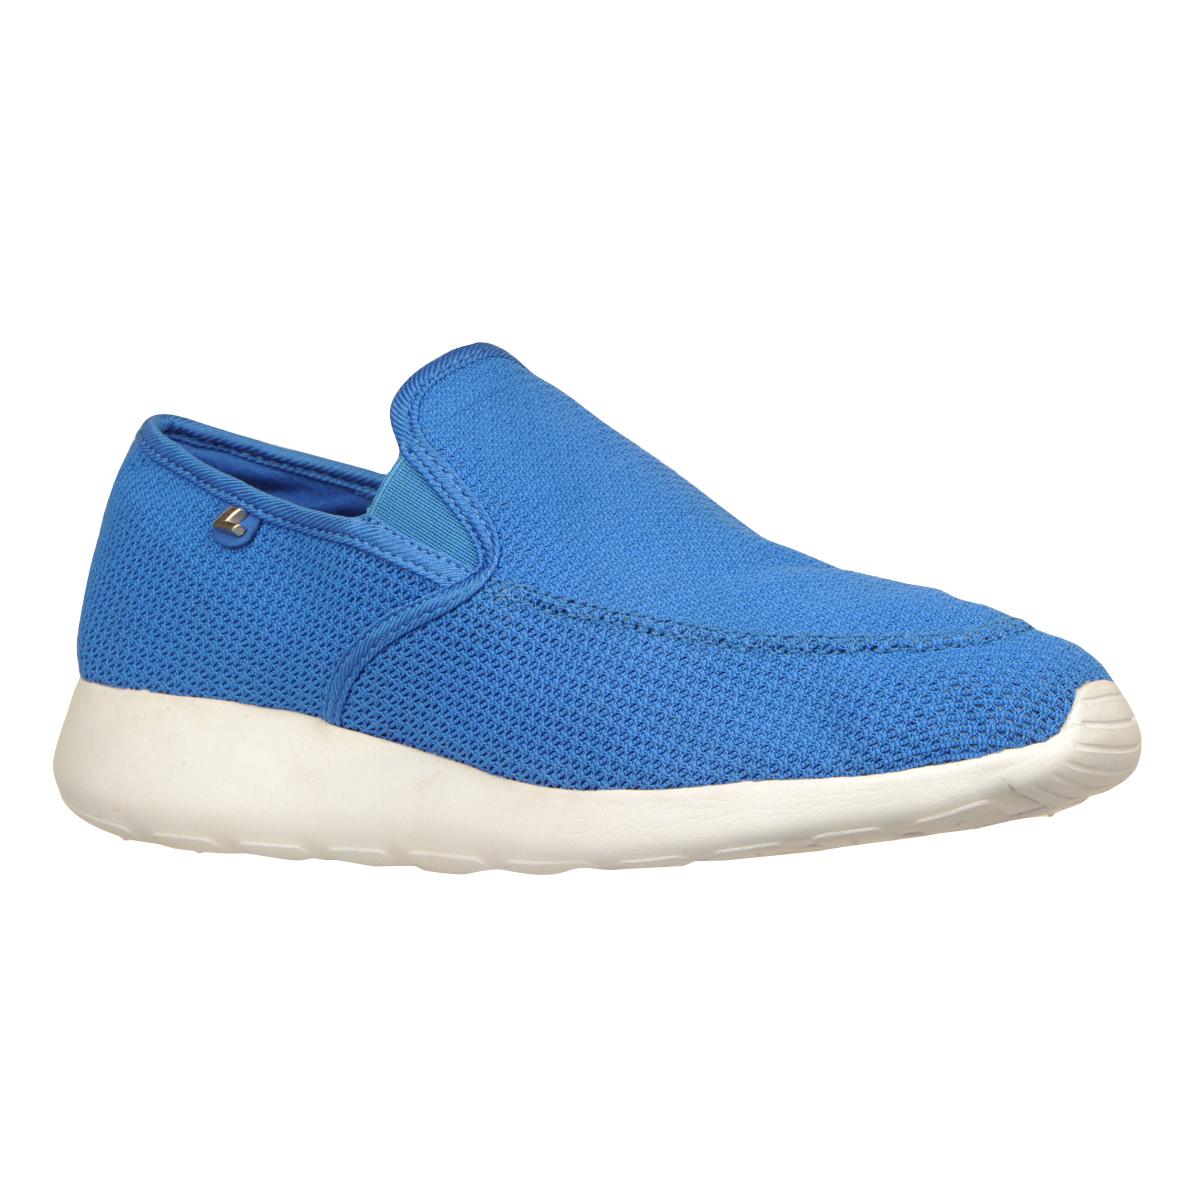 Lugz Men's Zosho Blue Slip-on Moccasin Sneaker